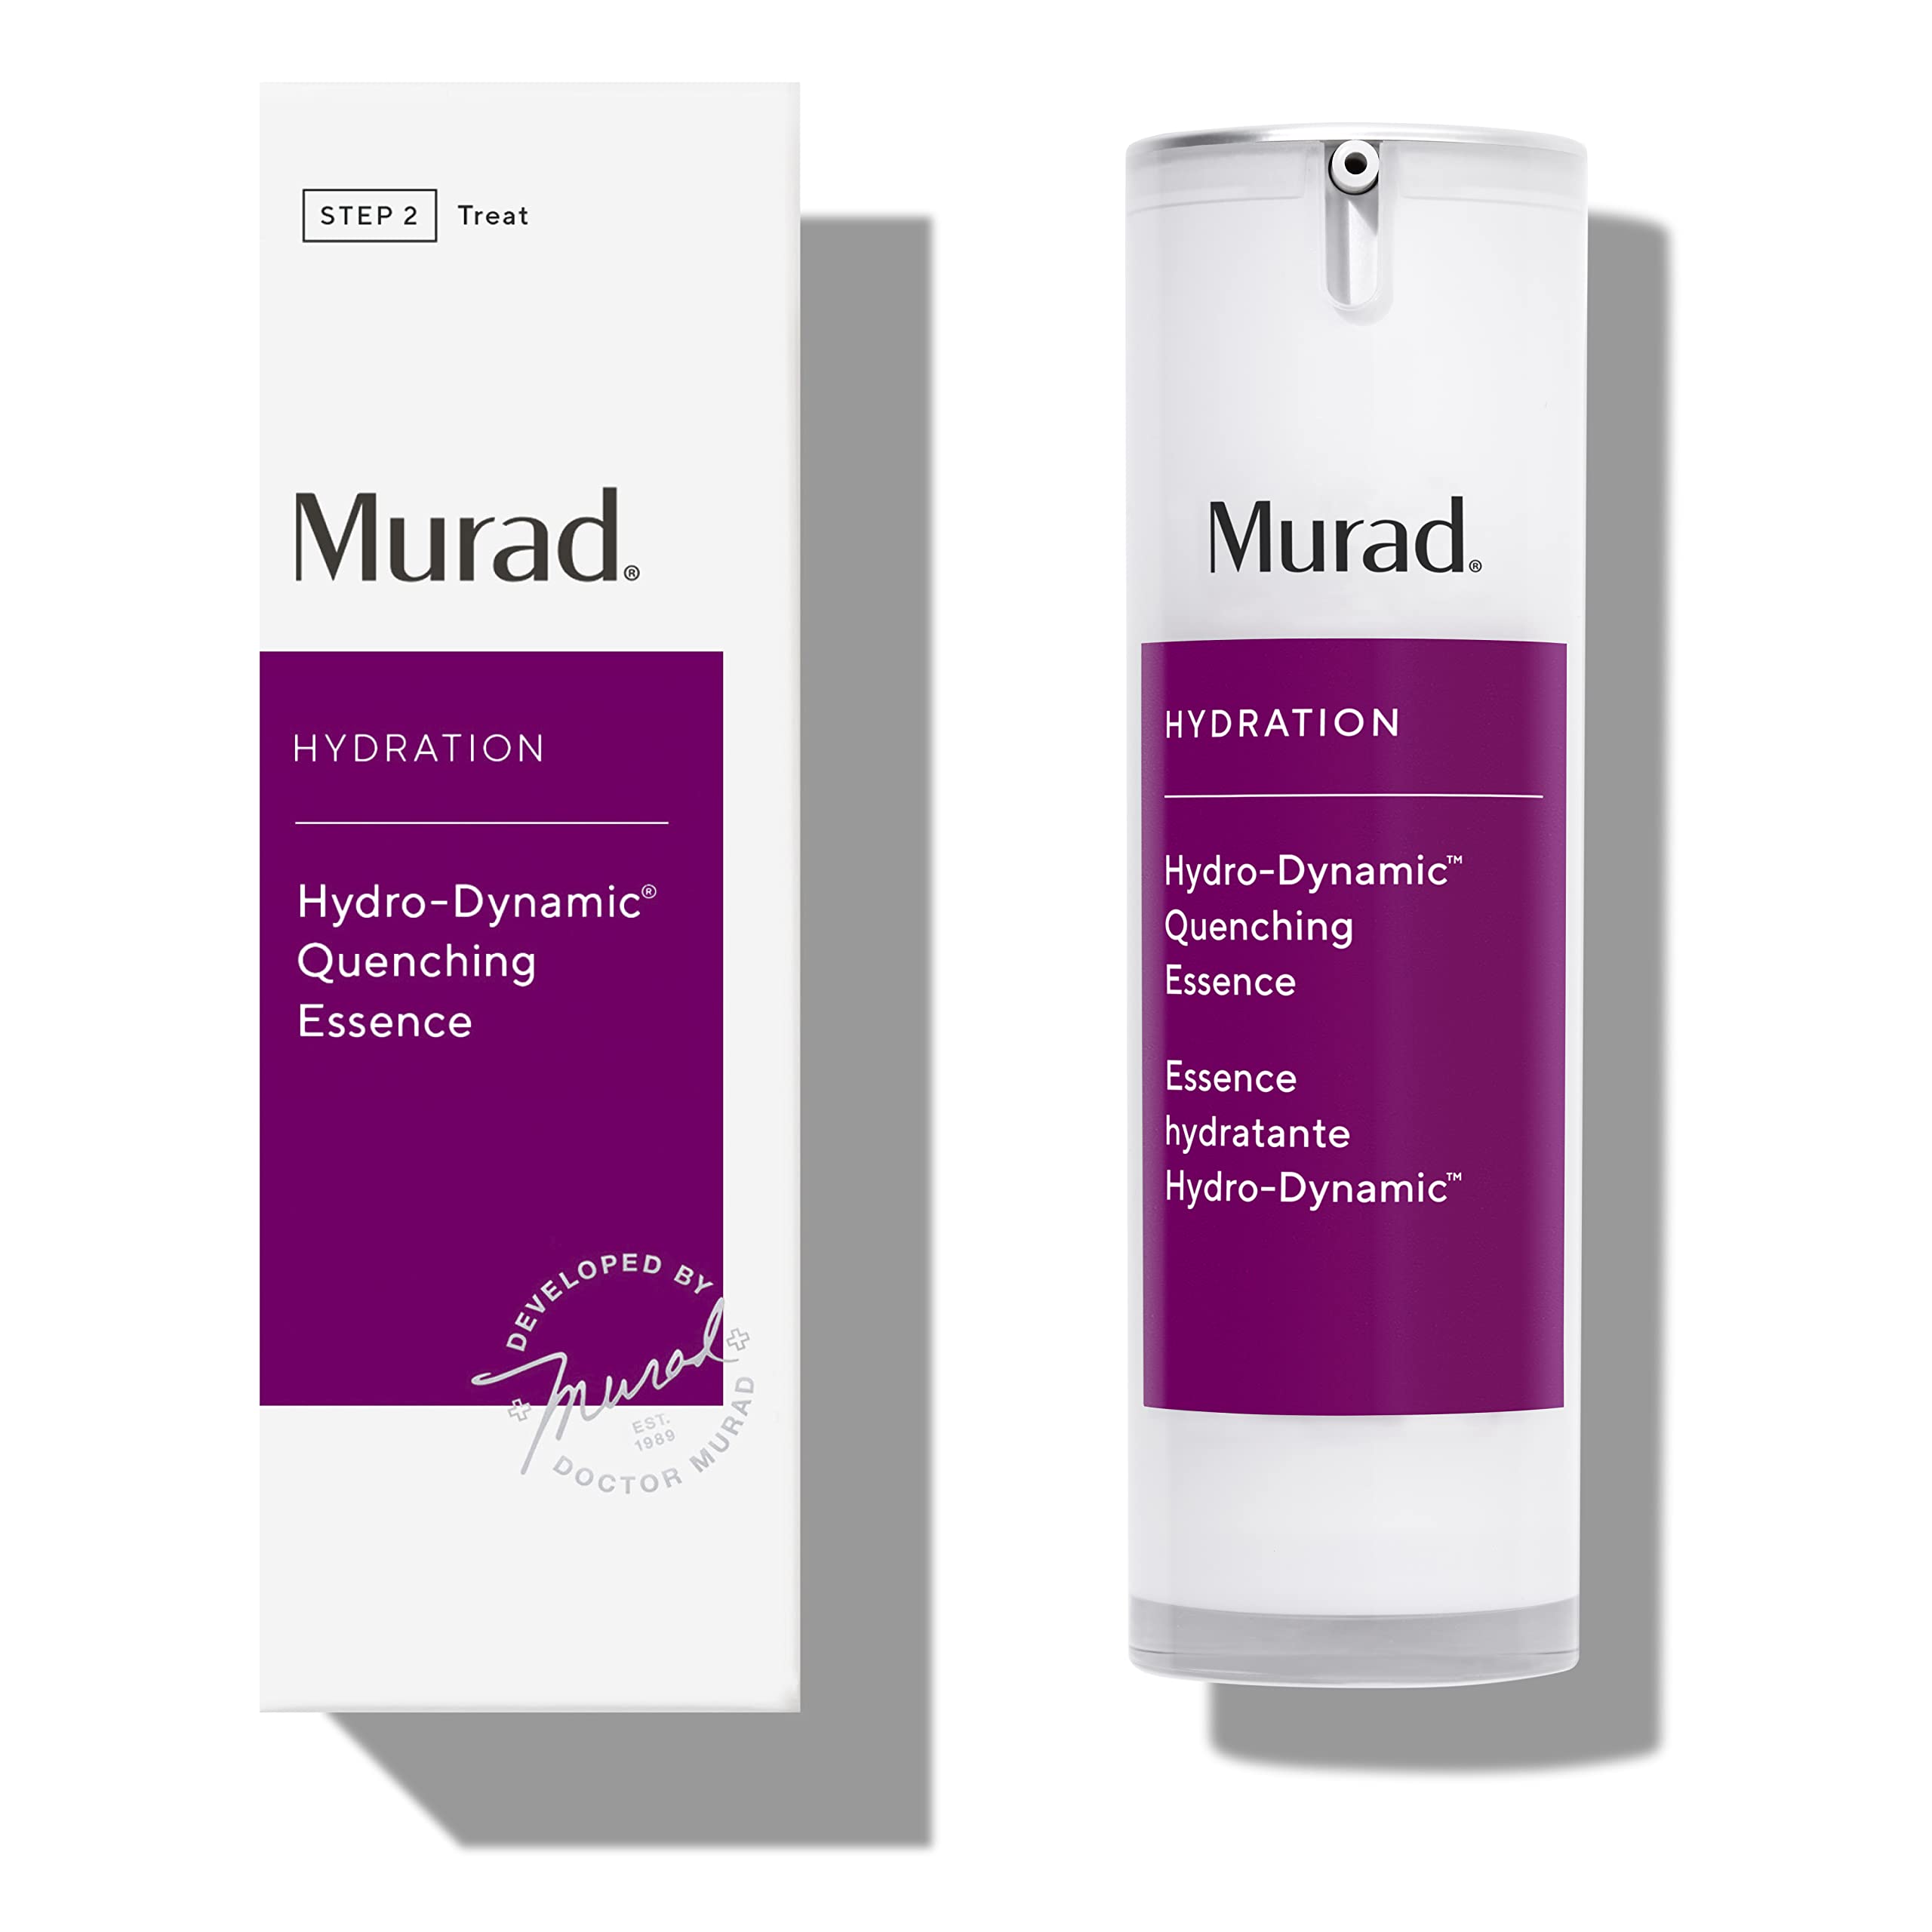 Murad Hydro-Dynamic Quenching Essence - Hydration Hydro-Boost Exfoliating Face Moisturizer - Weightless Face Essence with Glycolic Acid, 1.0 Fl Oz